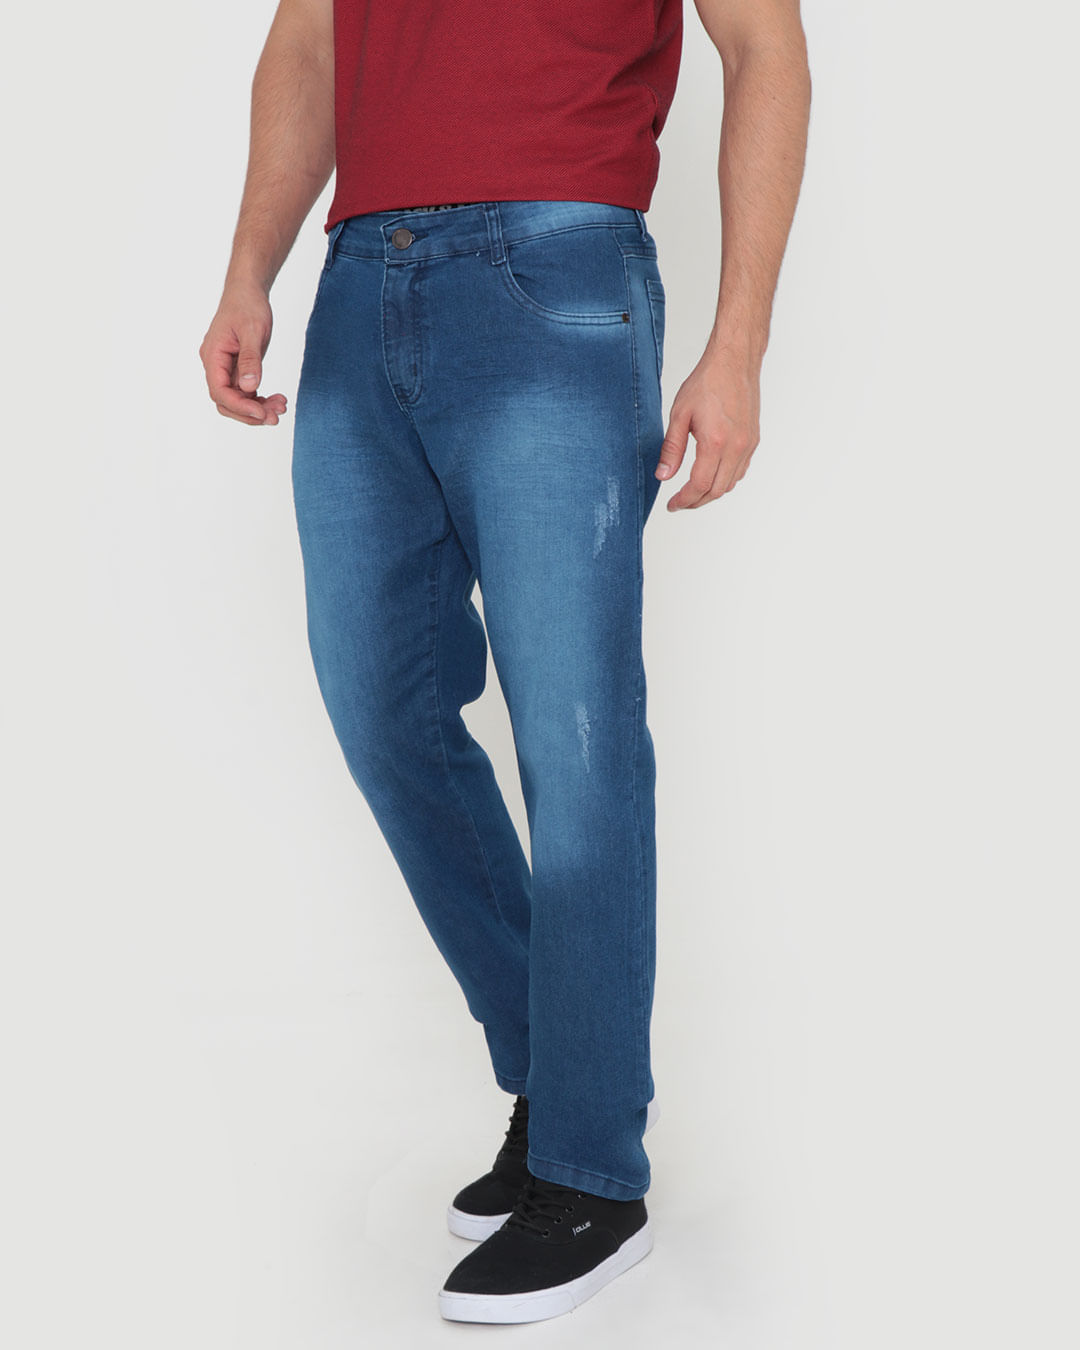 23121000974045-blue-jeans-medio-1